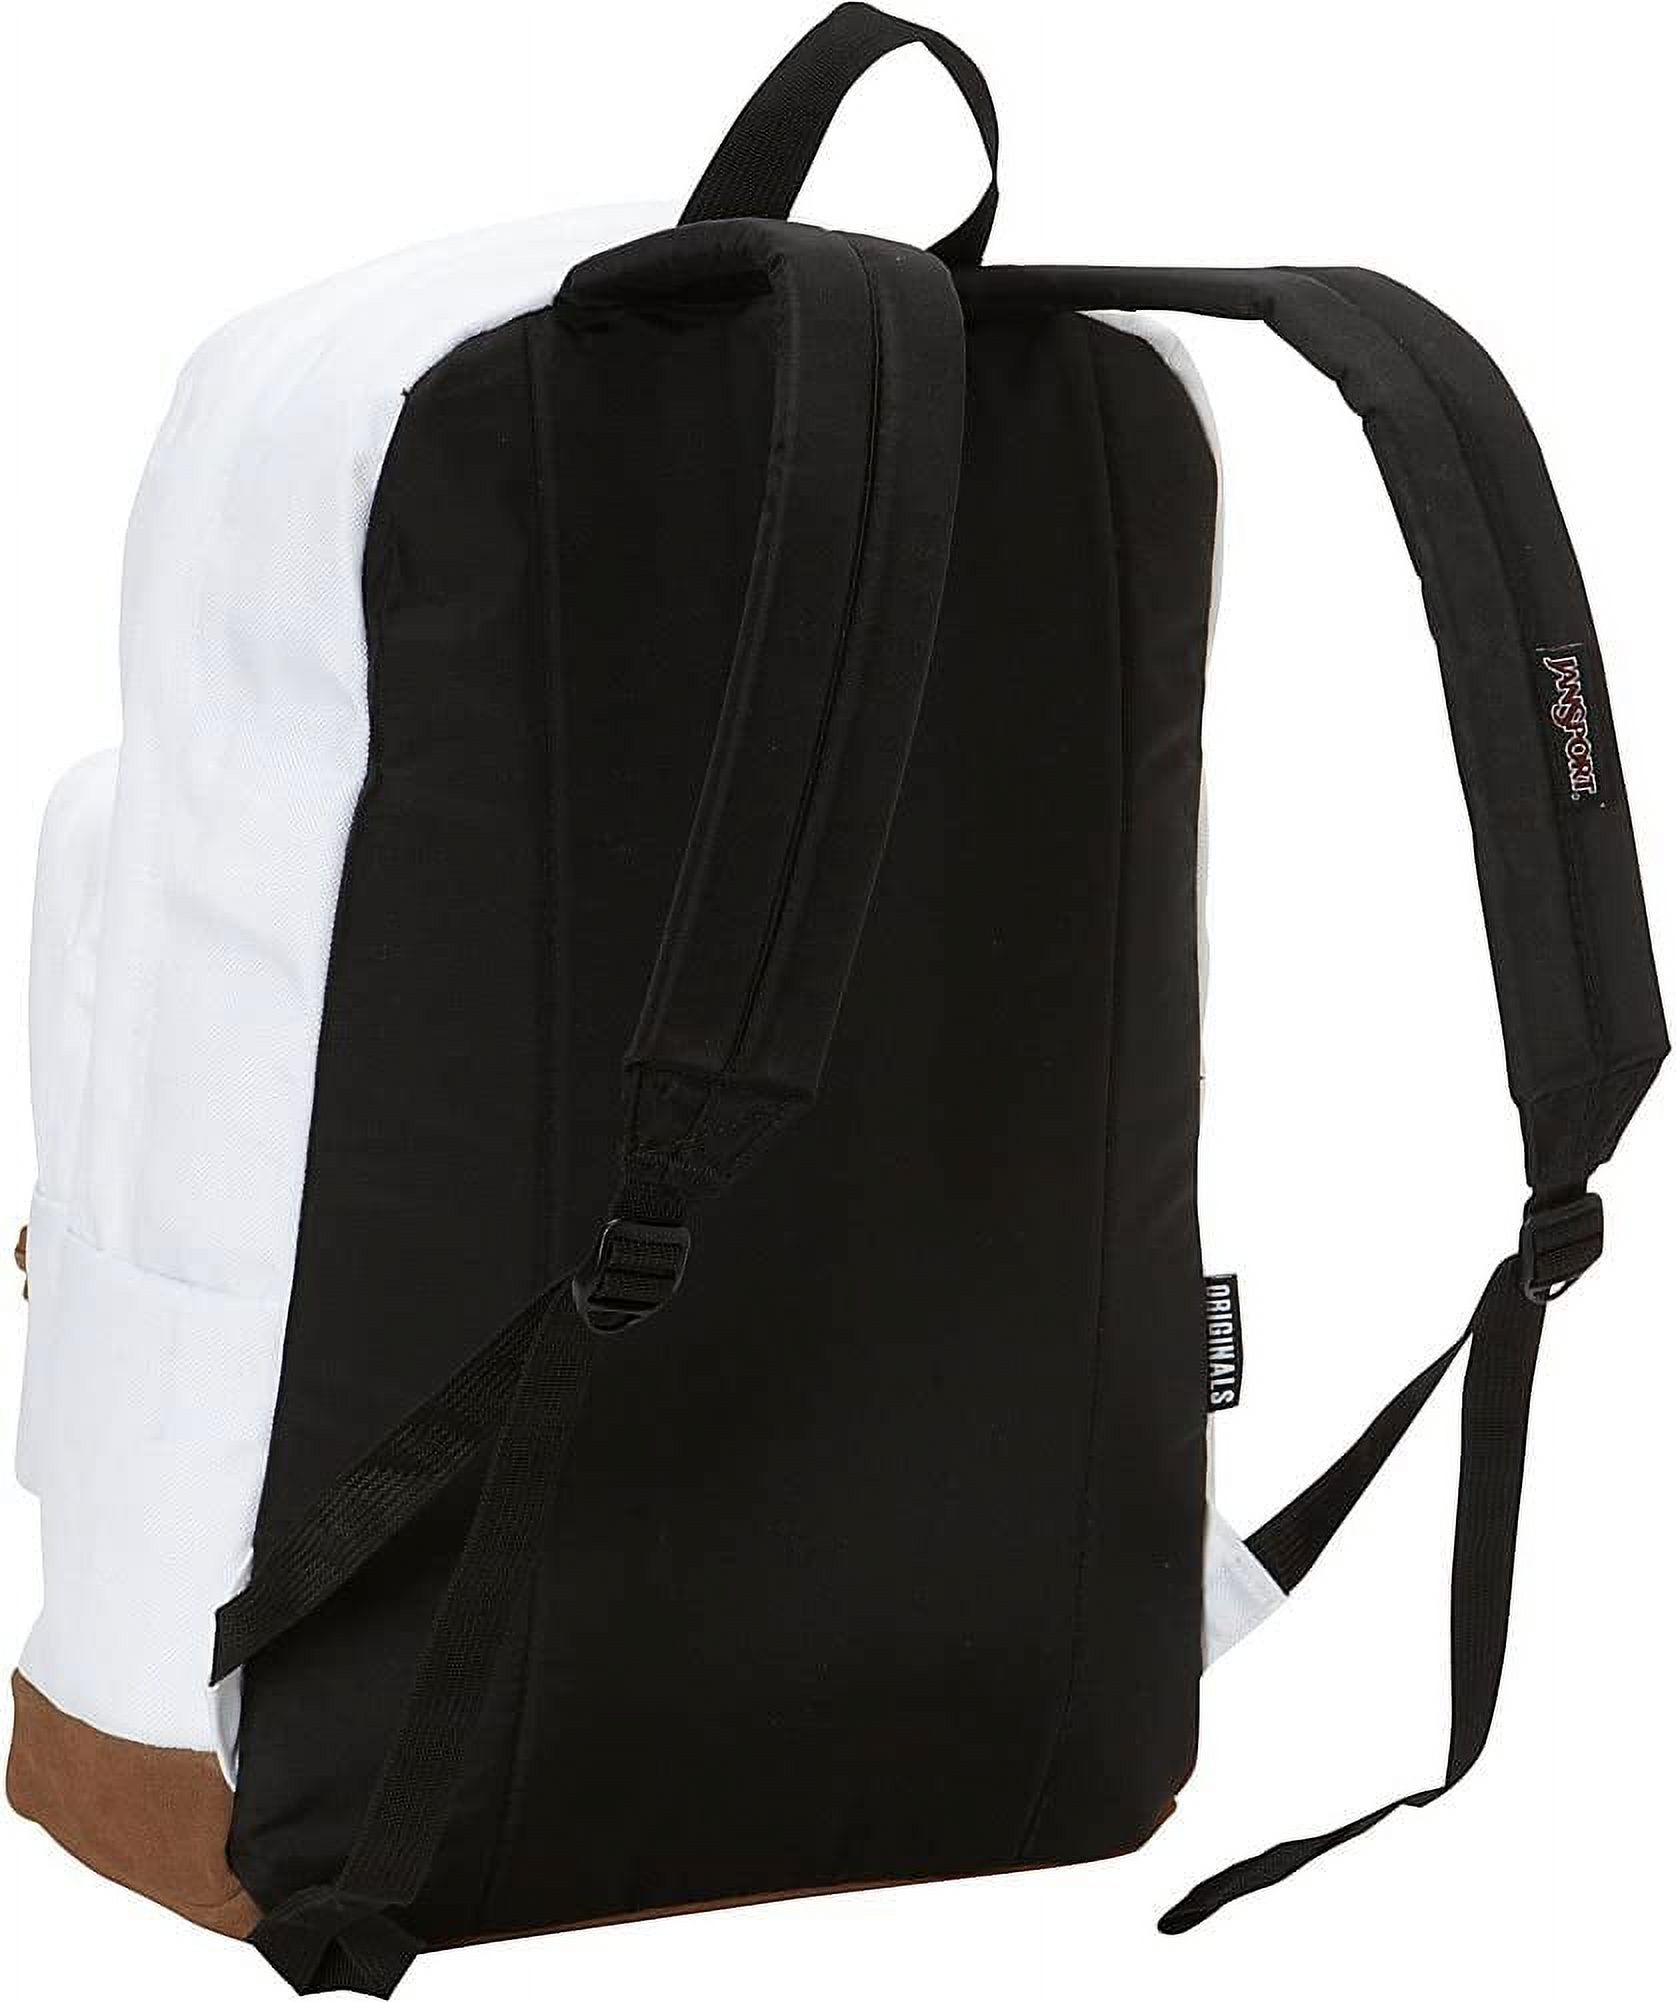 JanSport Right Pack Laptop Backpack- Sale Colors (Silver Rose Jacquard) - image 4 of 7